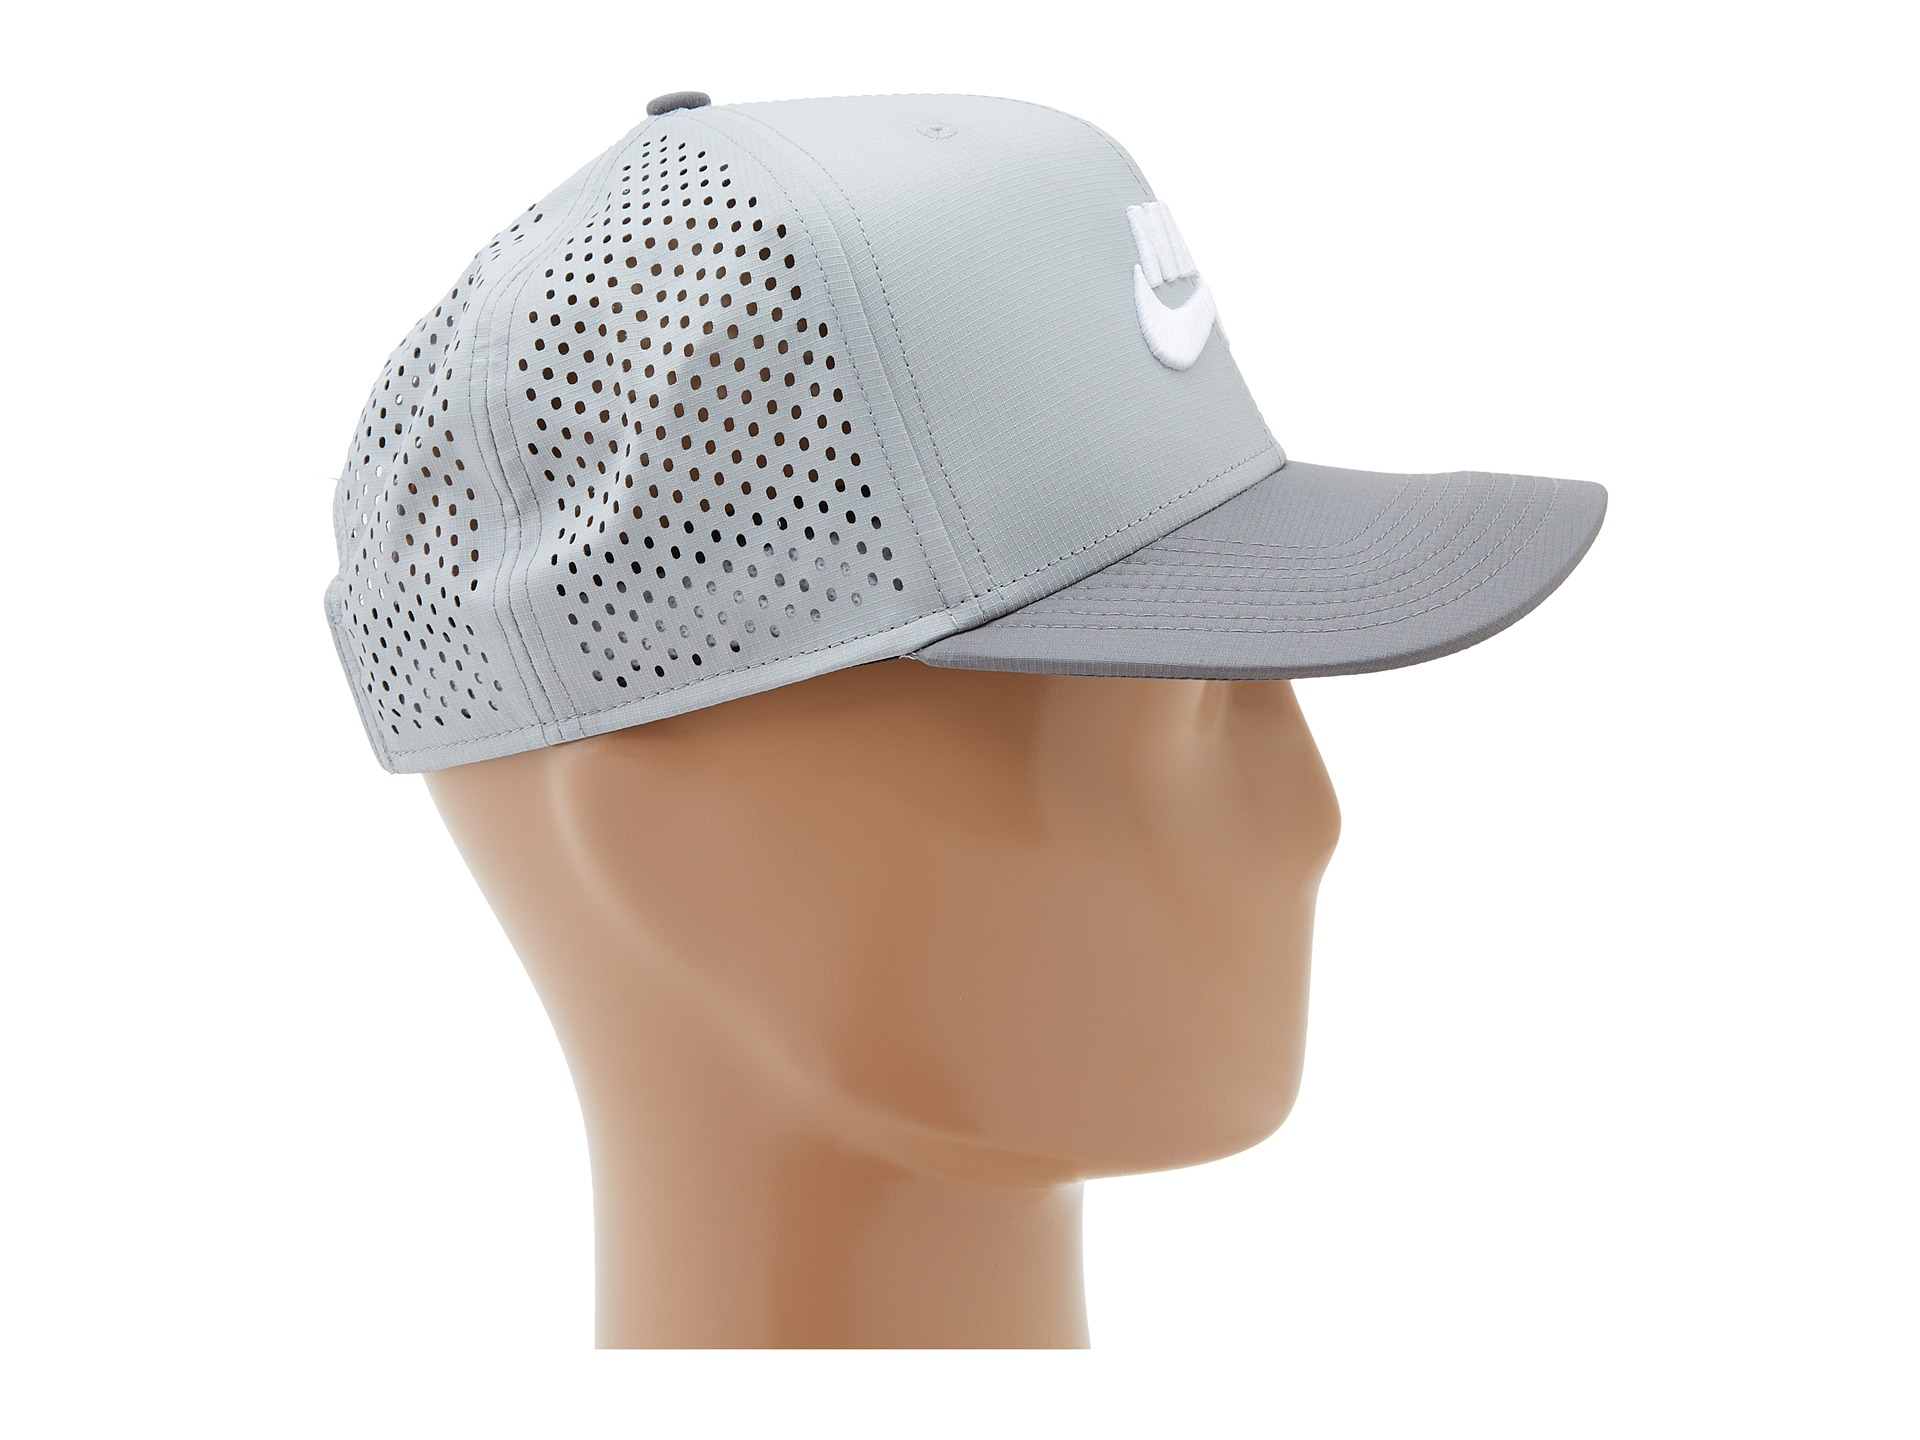 Nike Performance Trucker Hat in Grey (Gray) for Men - Lyst